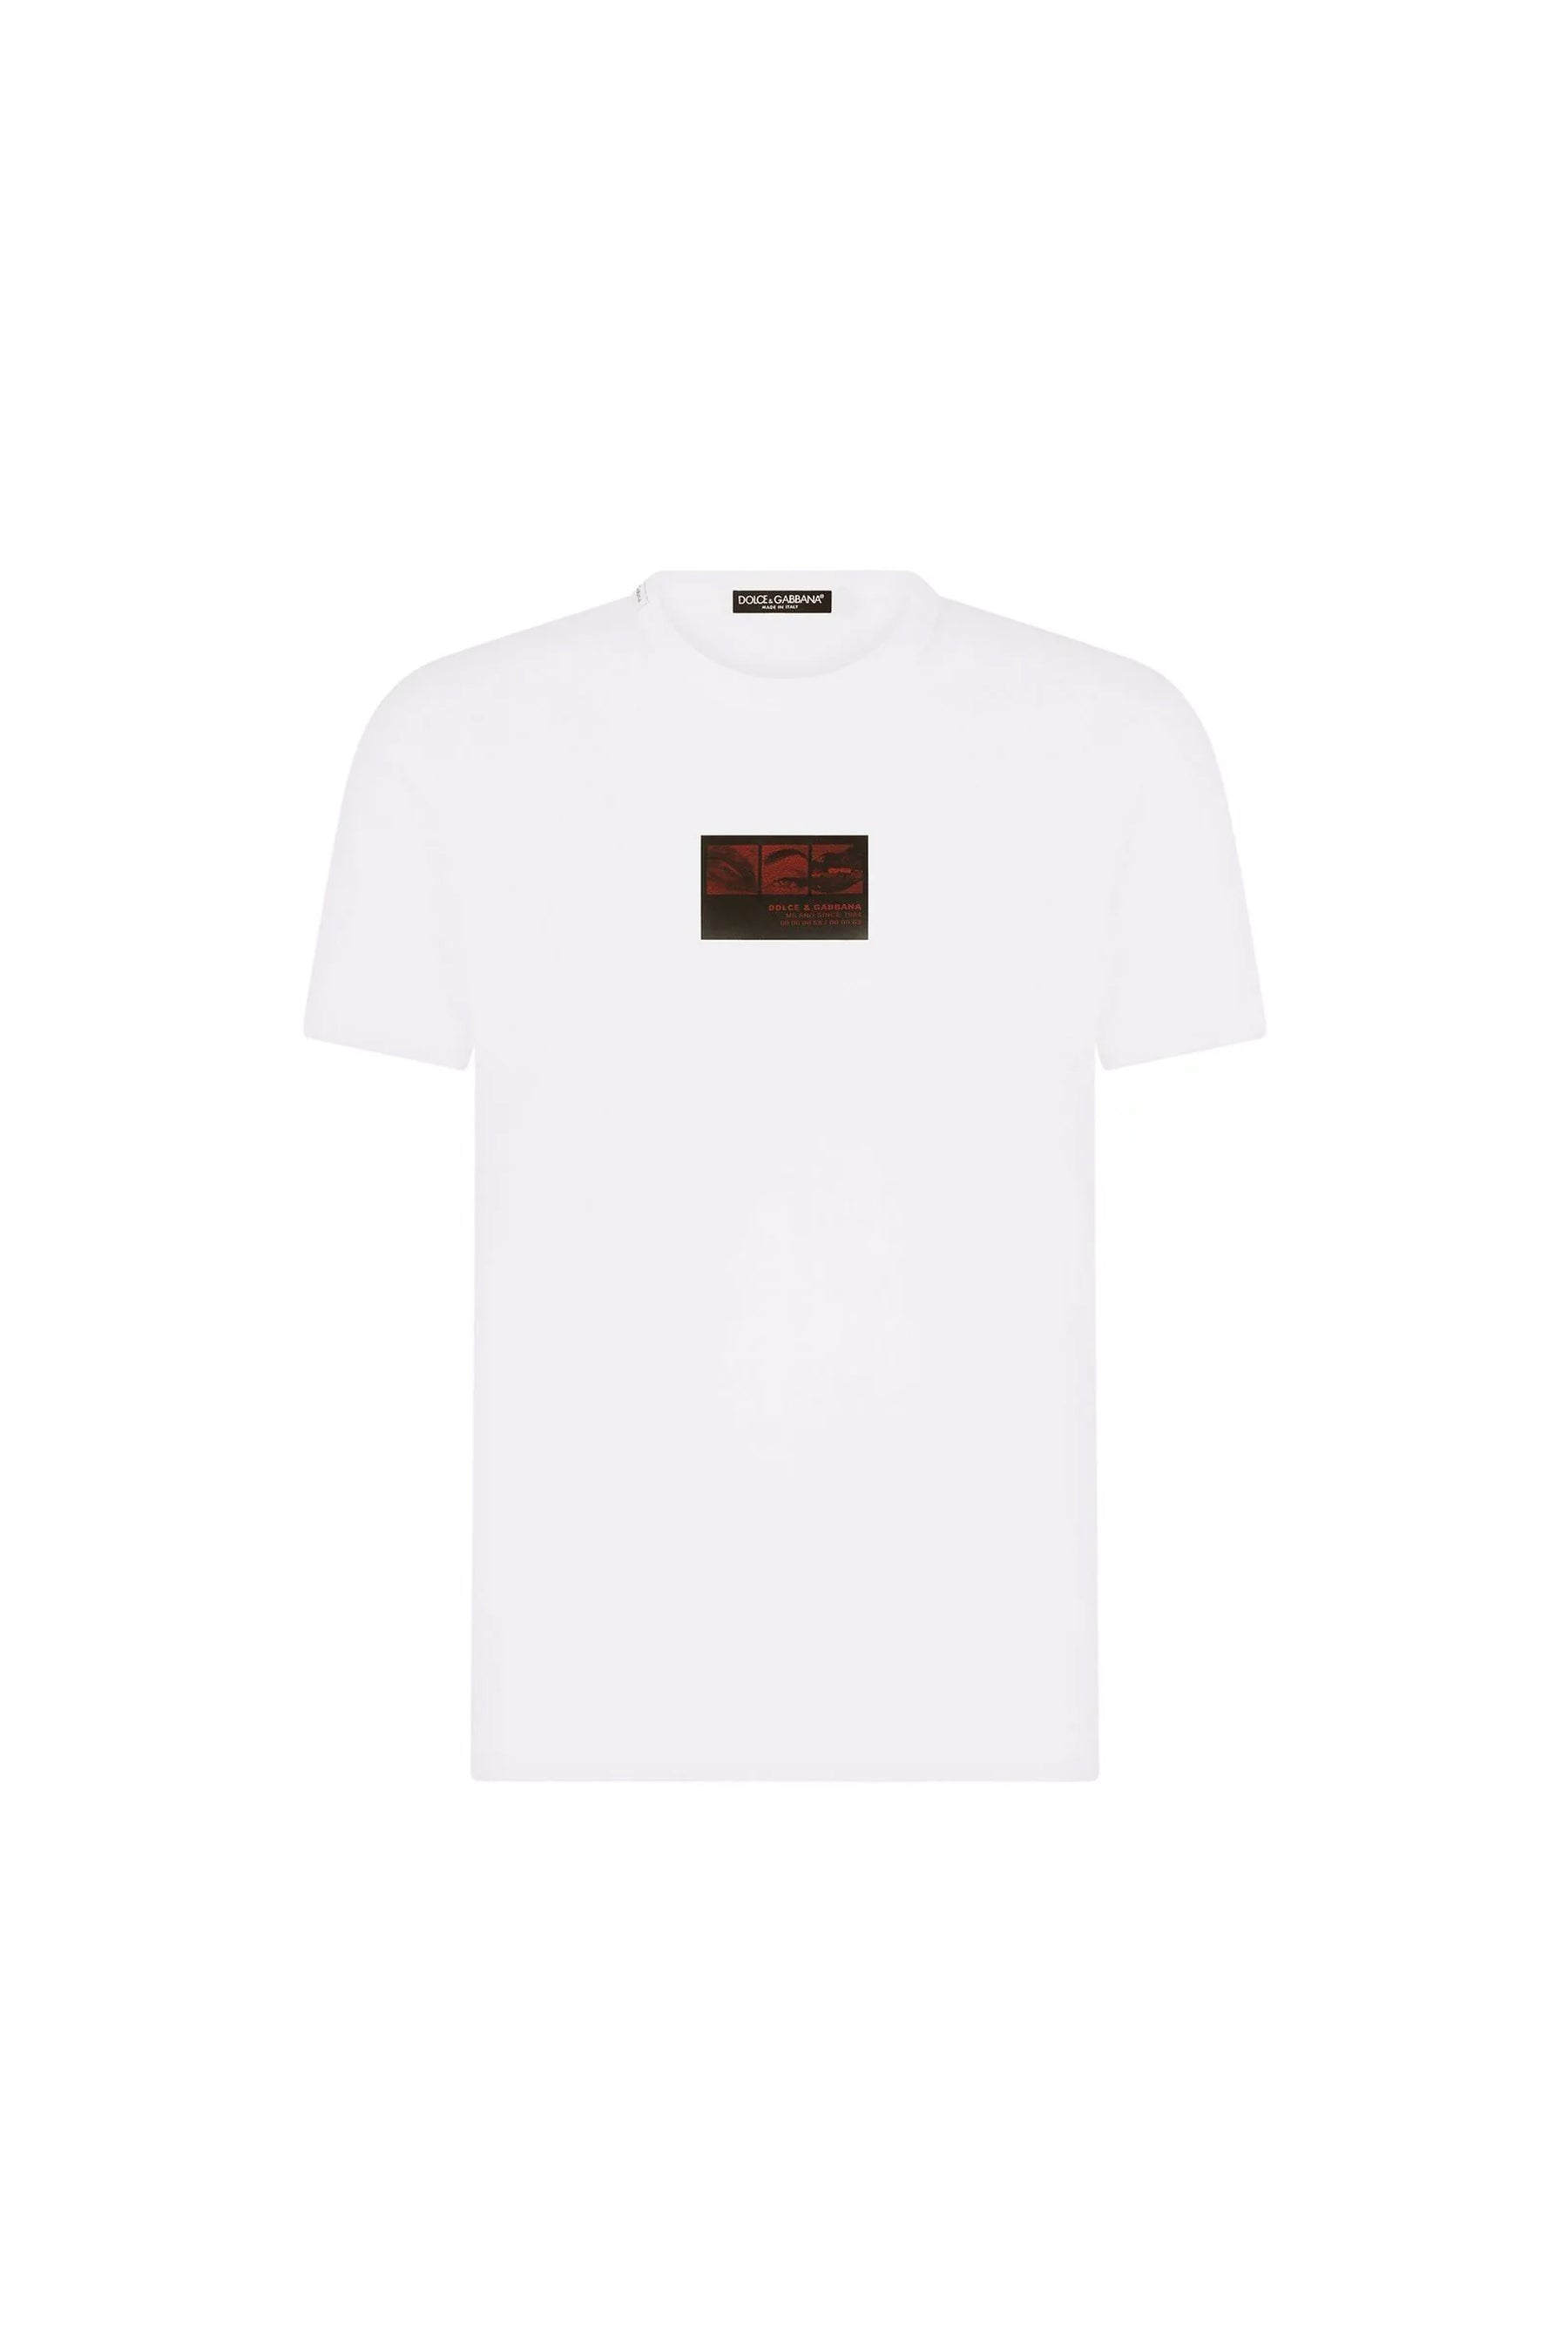 Dolce & Gabbana graphic-print T-shirt